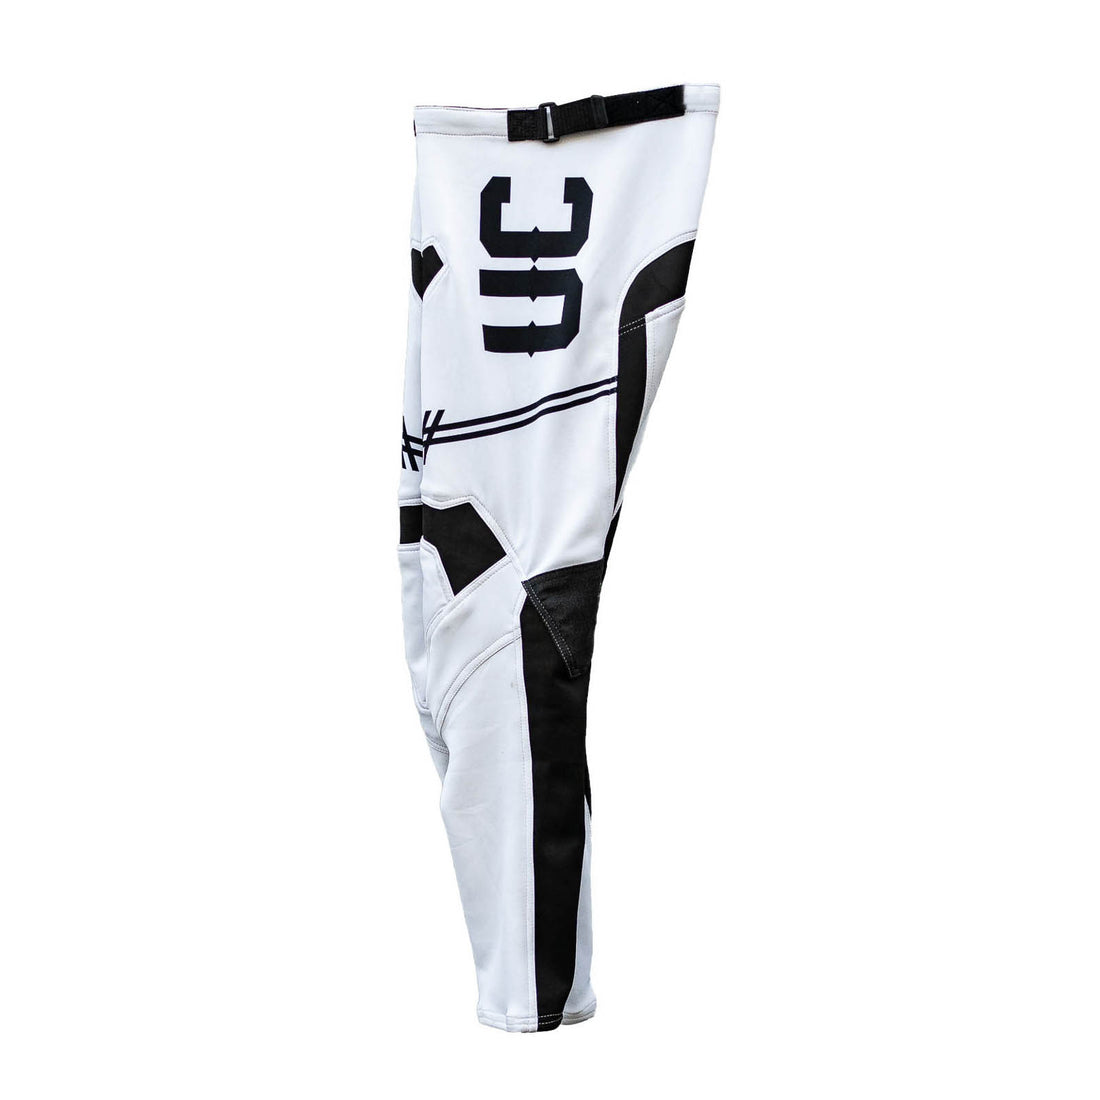 Underclass MX1405 MX Pants - White / Black